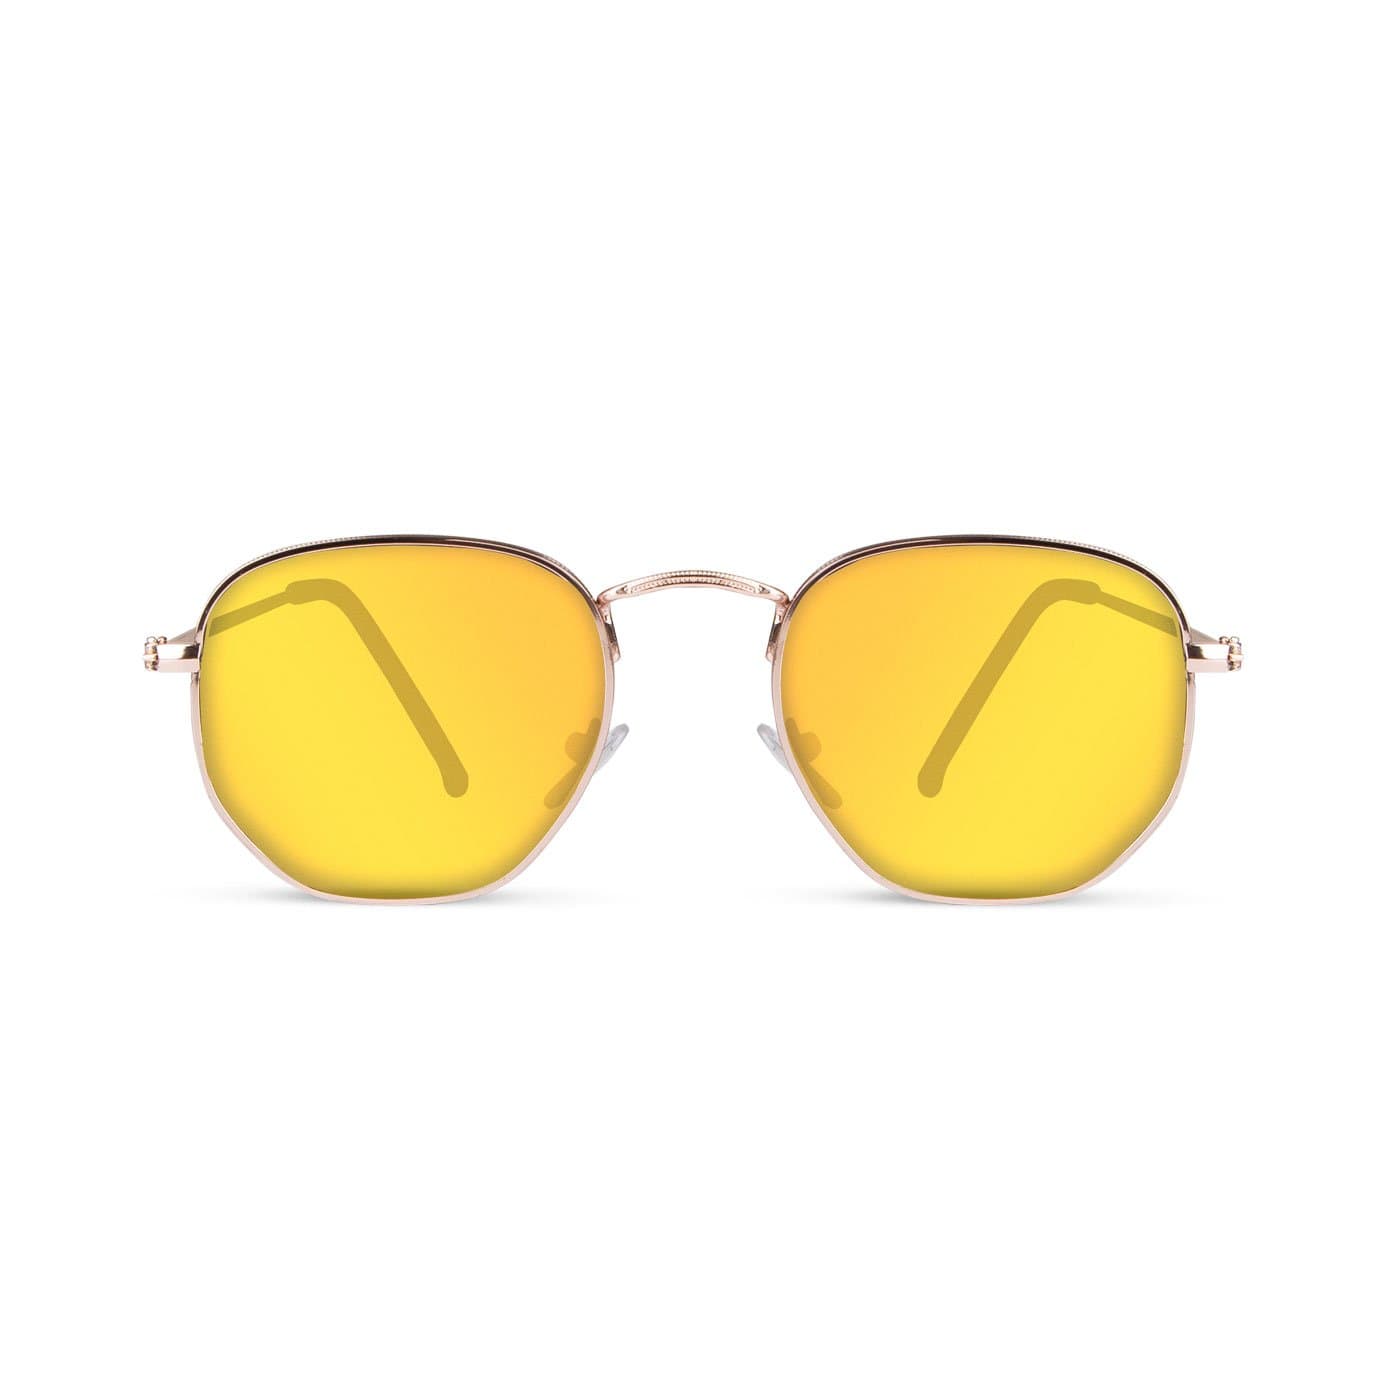 Samui Gold / Yellow Sunglasses